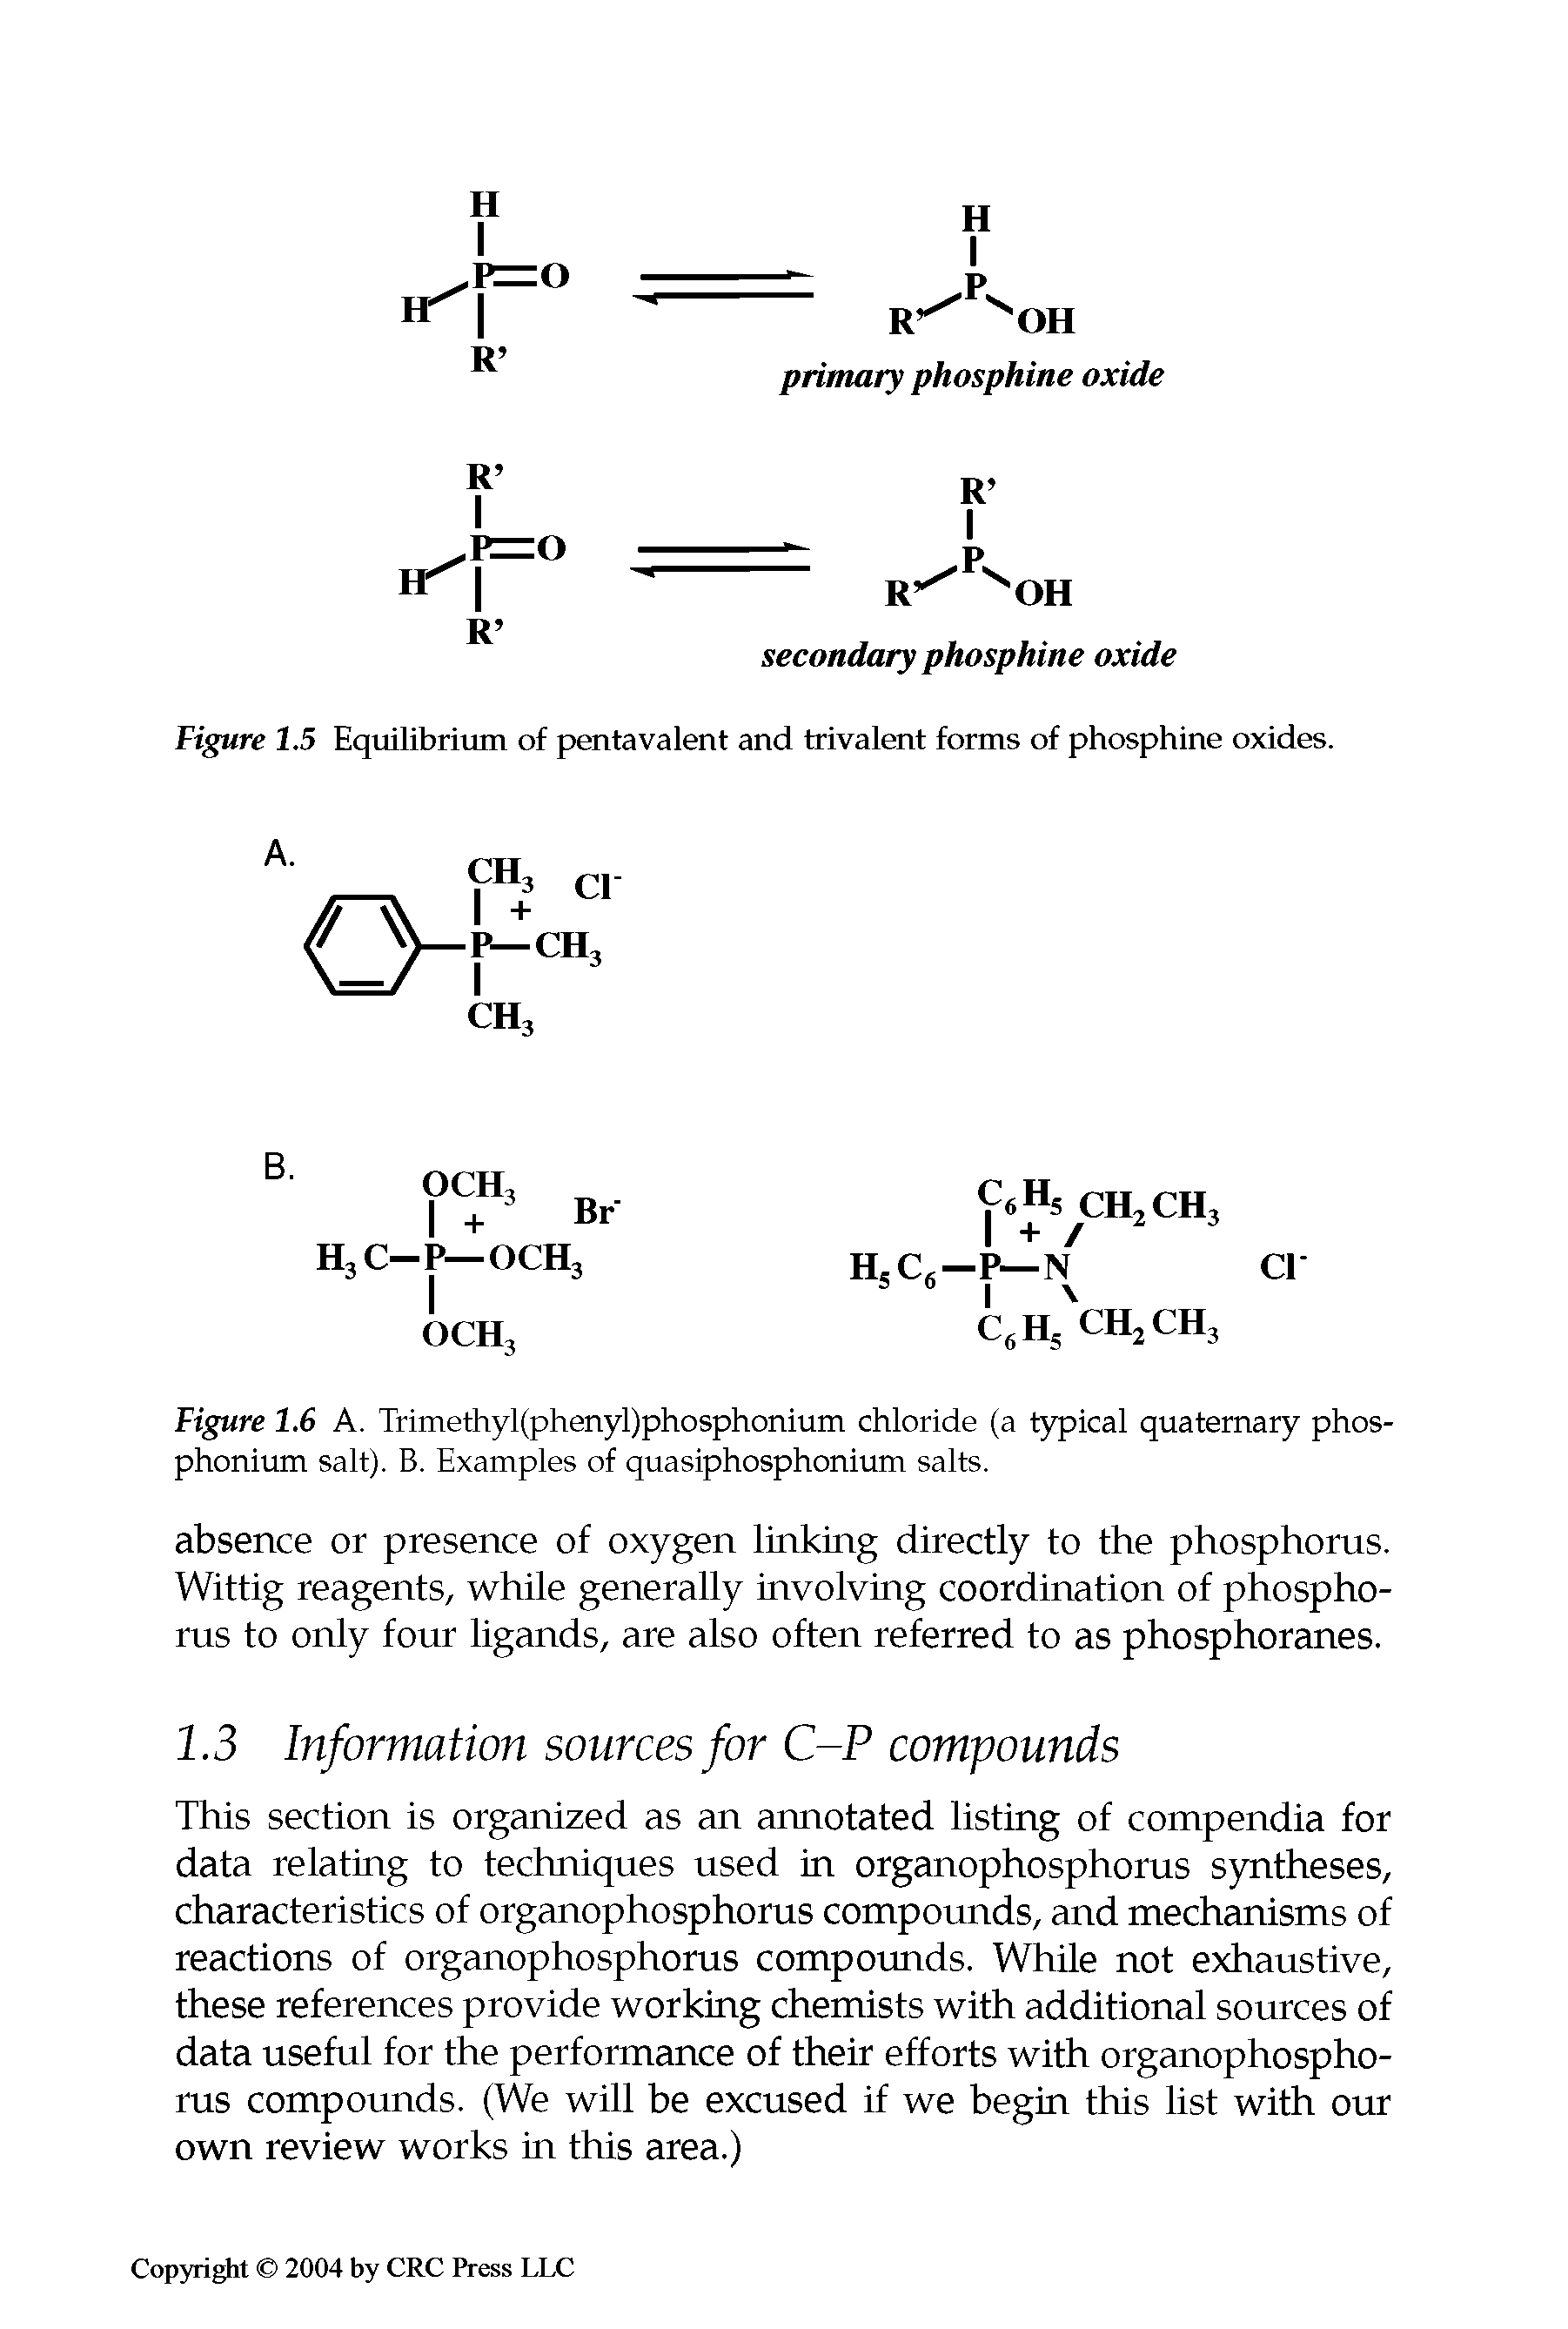 Figure 1.6 A. Trimethyl(phenyl)phosphonium chloride (a typical quaternary phos-phonium salt). B. Examples of quasiphosphonium salts.